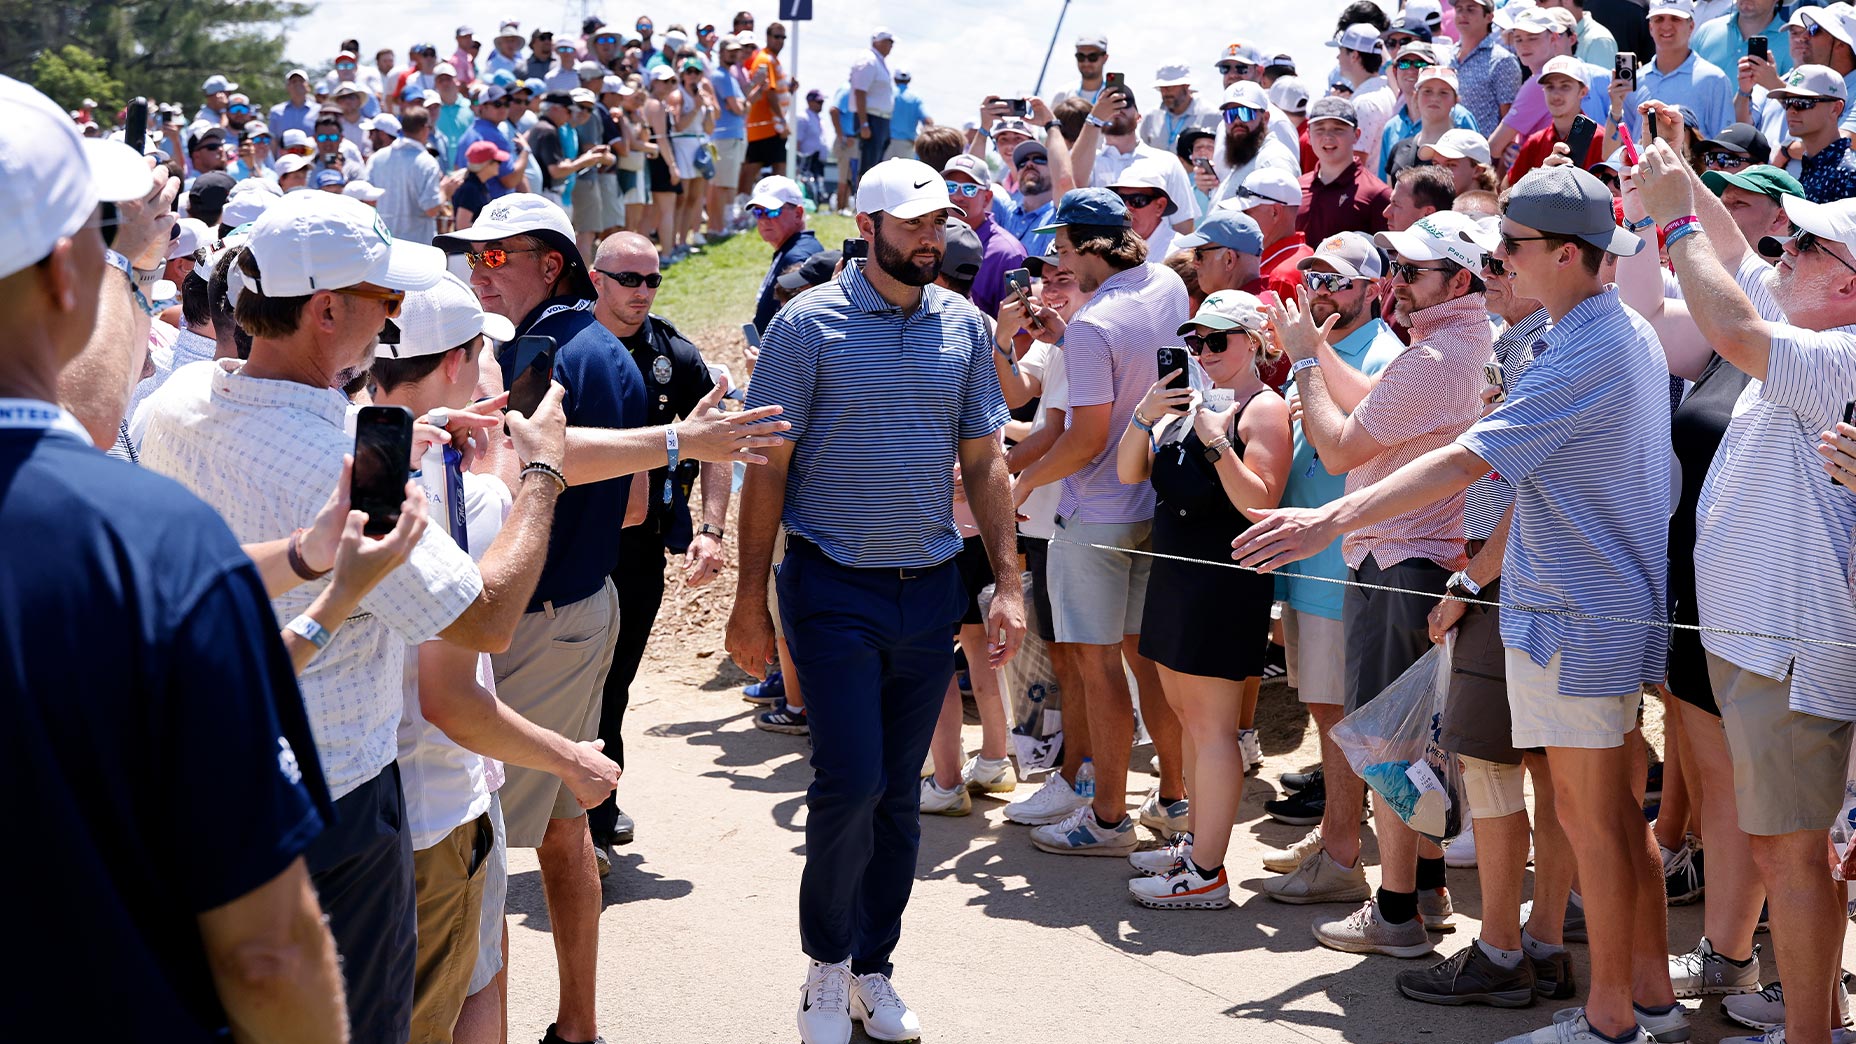 Scottie Scheffler walks through a crowd at the PGA Championship in a striped shirt